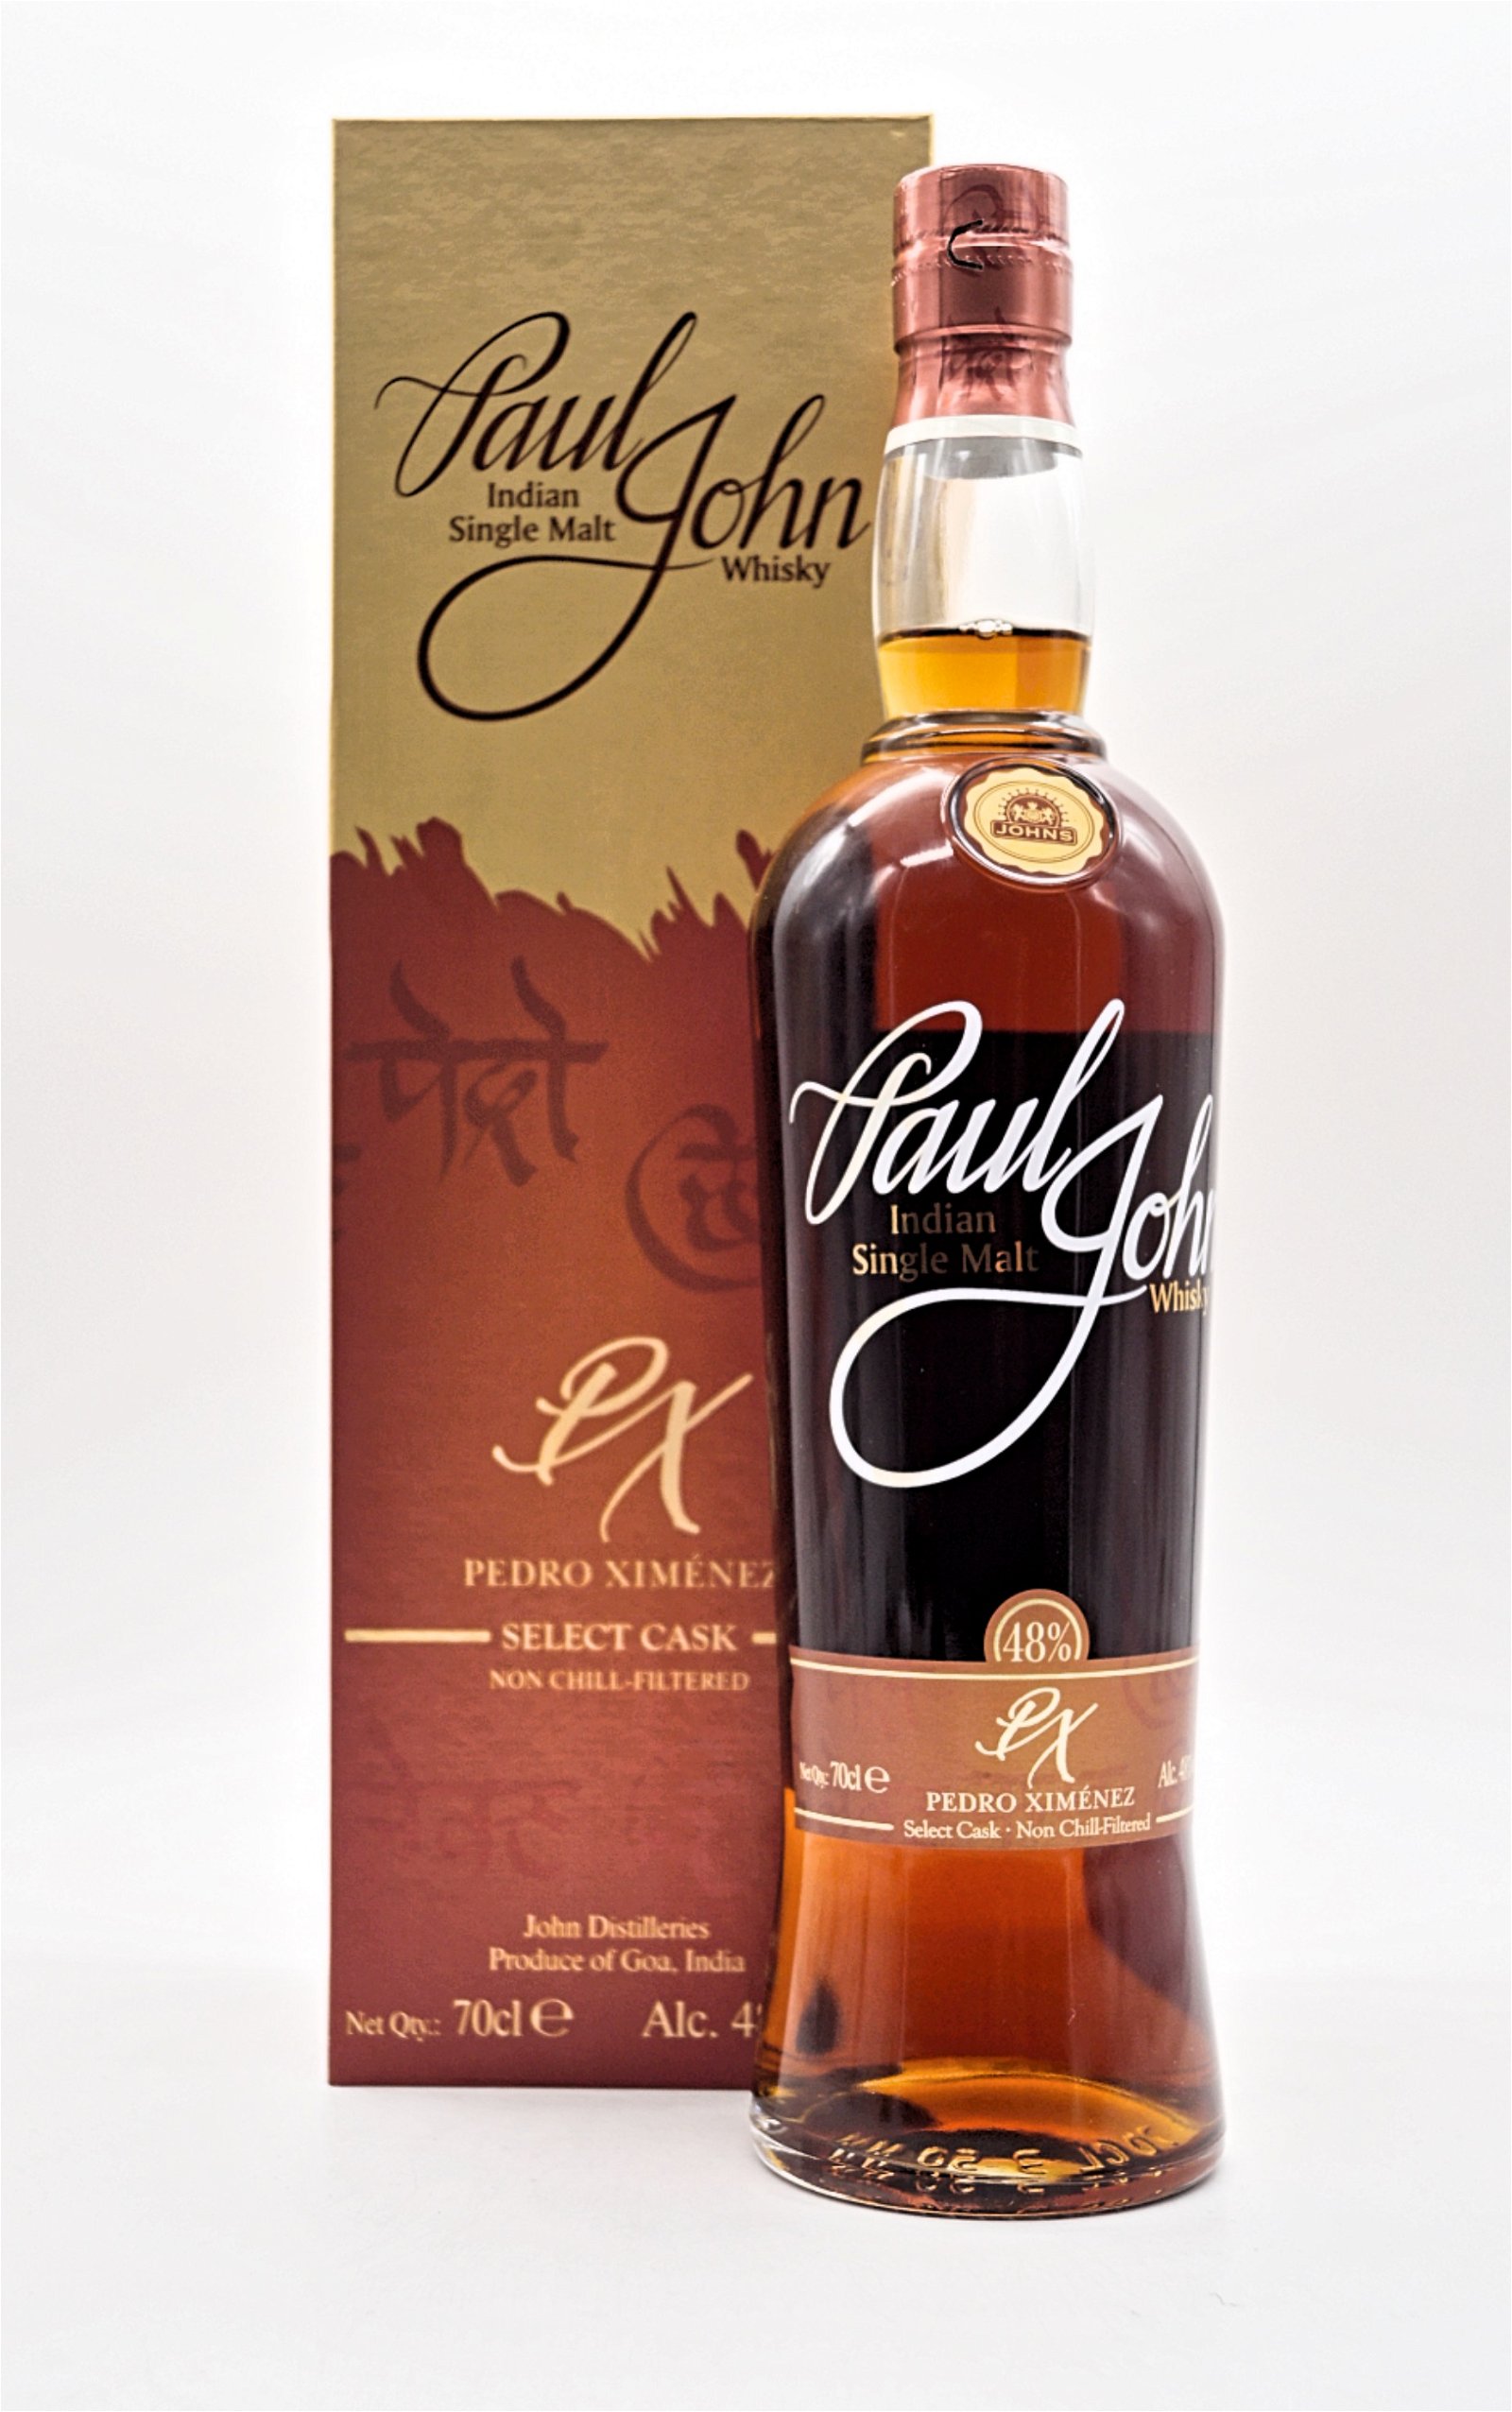 Paul John PX Pedro Ximenez Select Cask Batch 3 Indian Single Malt Whisky